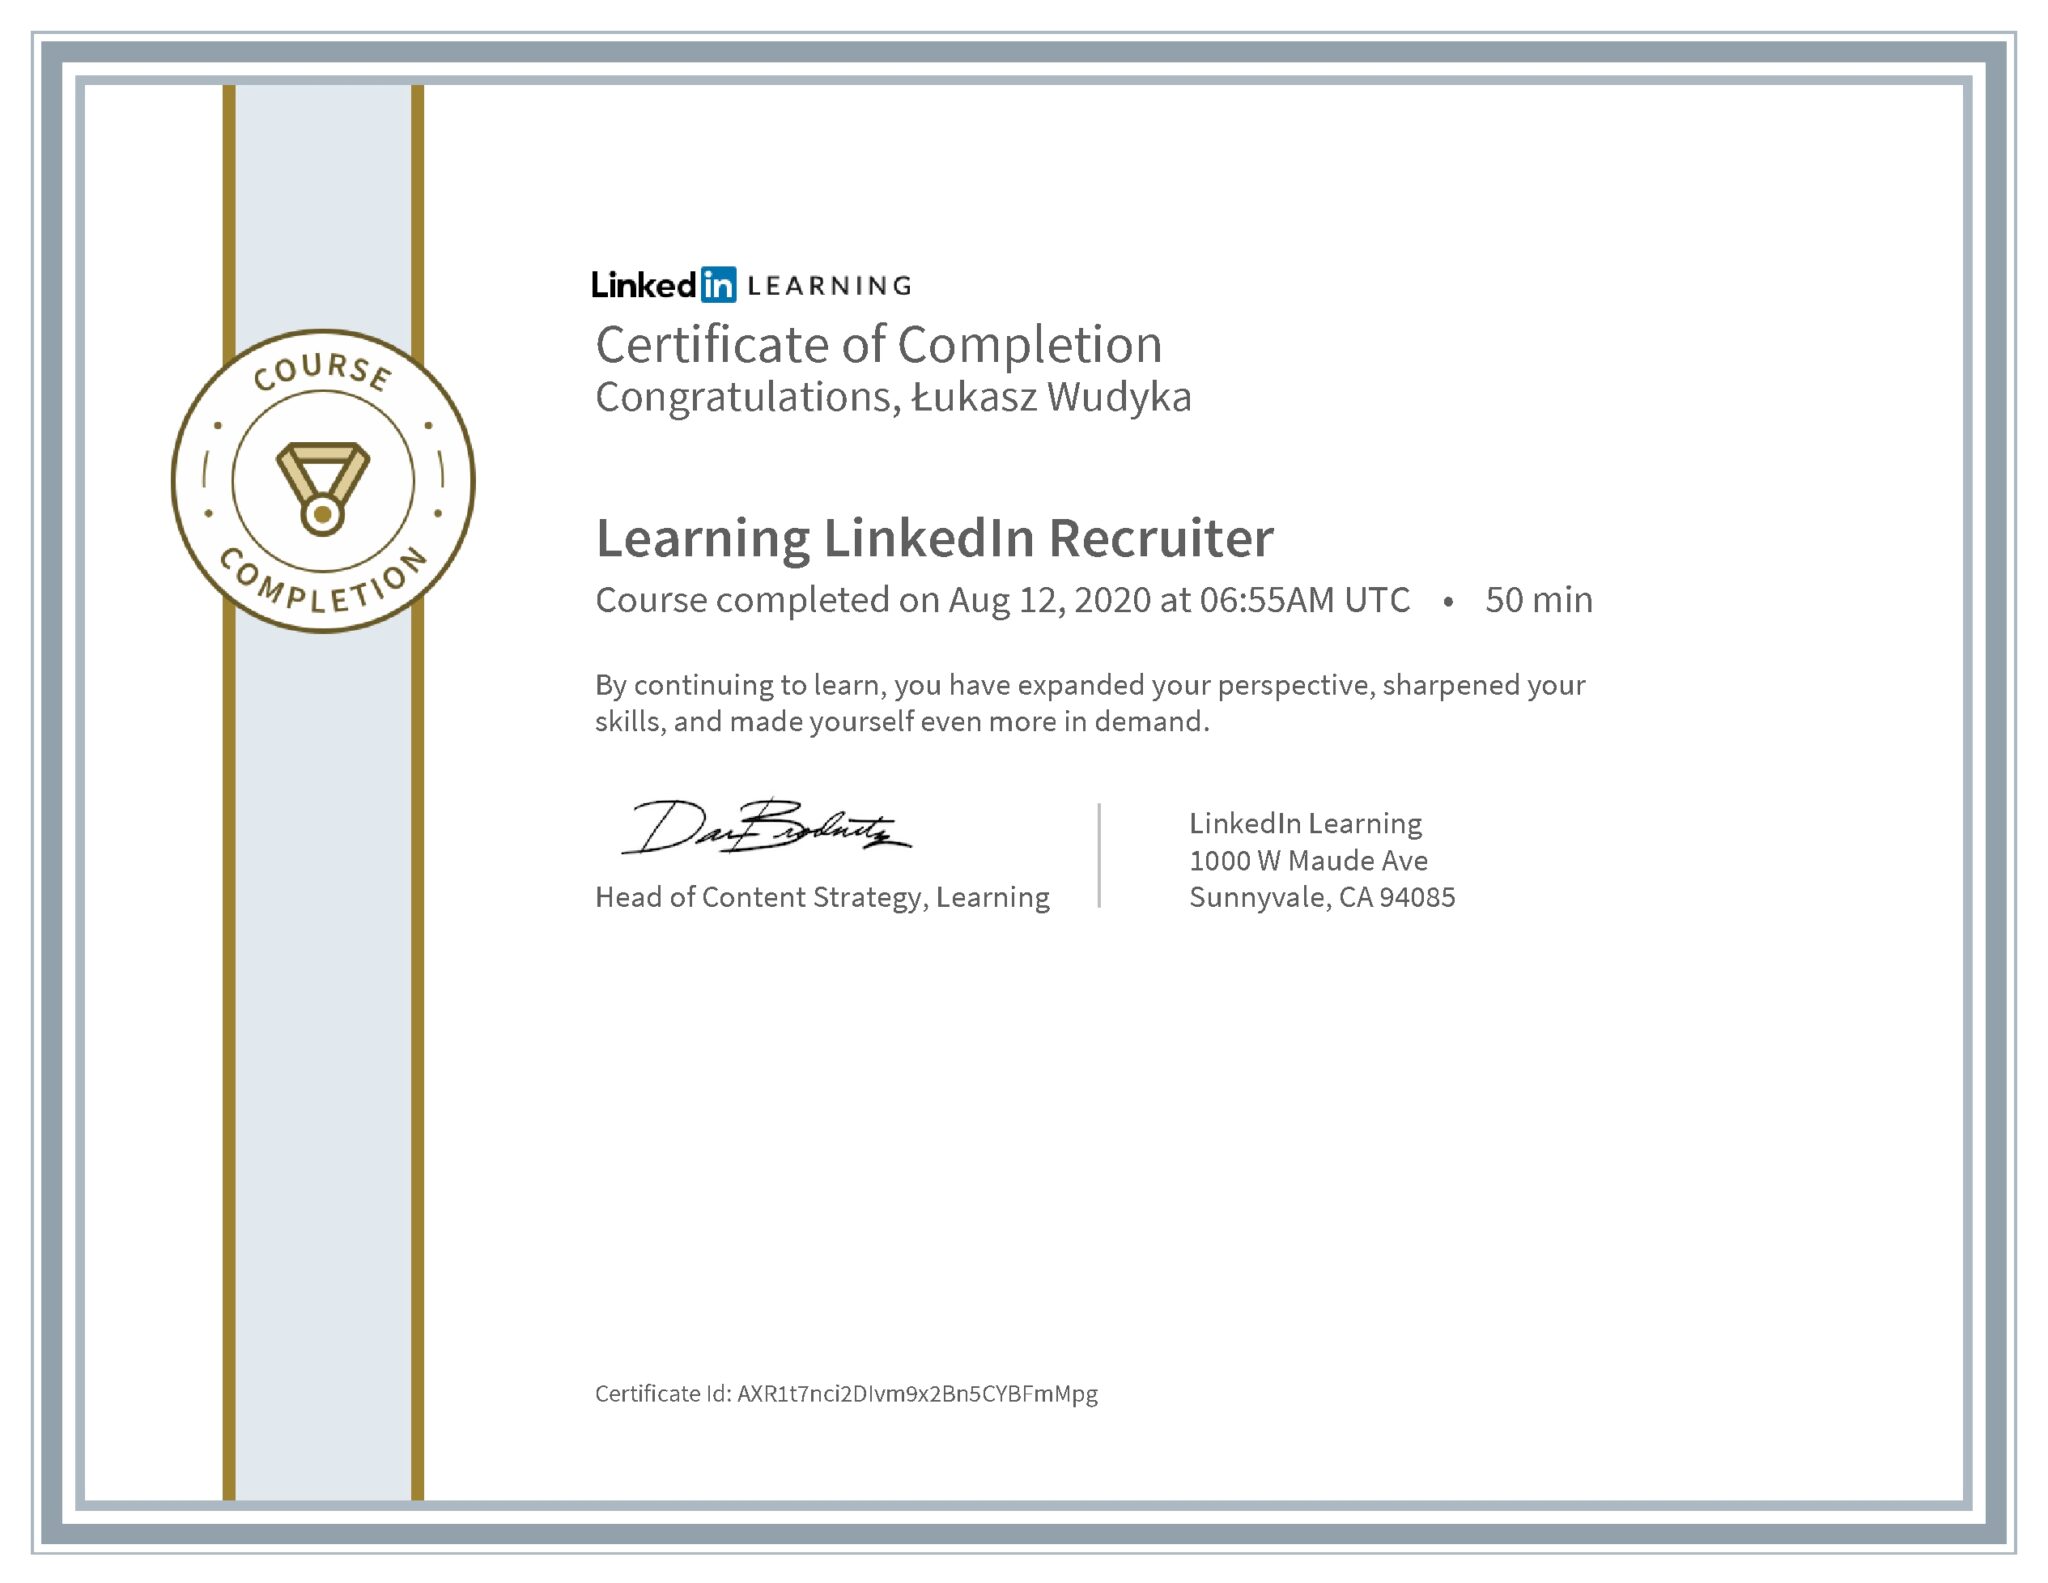 Łukasz Wudyka certyfikat LinkedIn Learning LinkedIn Recruiter